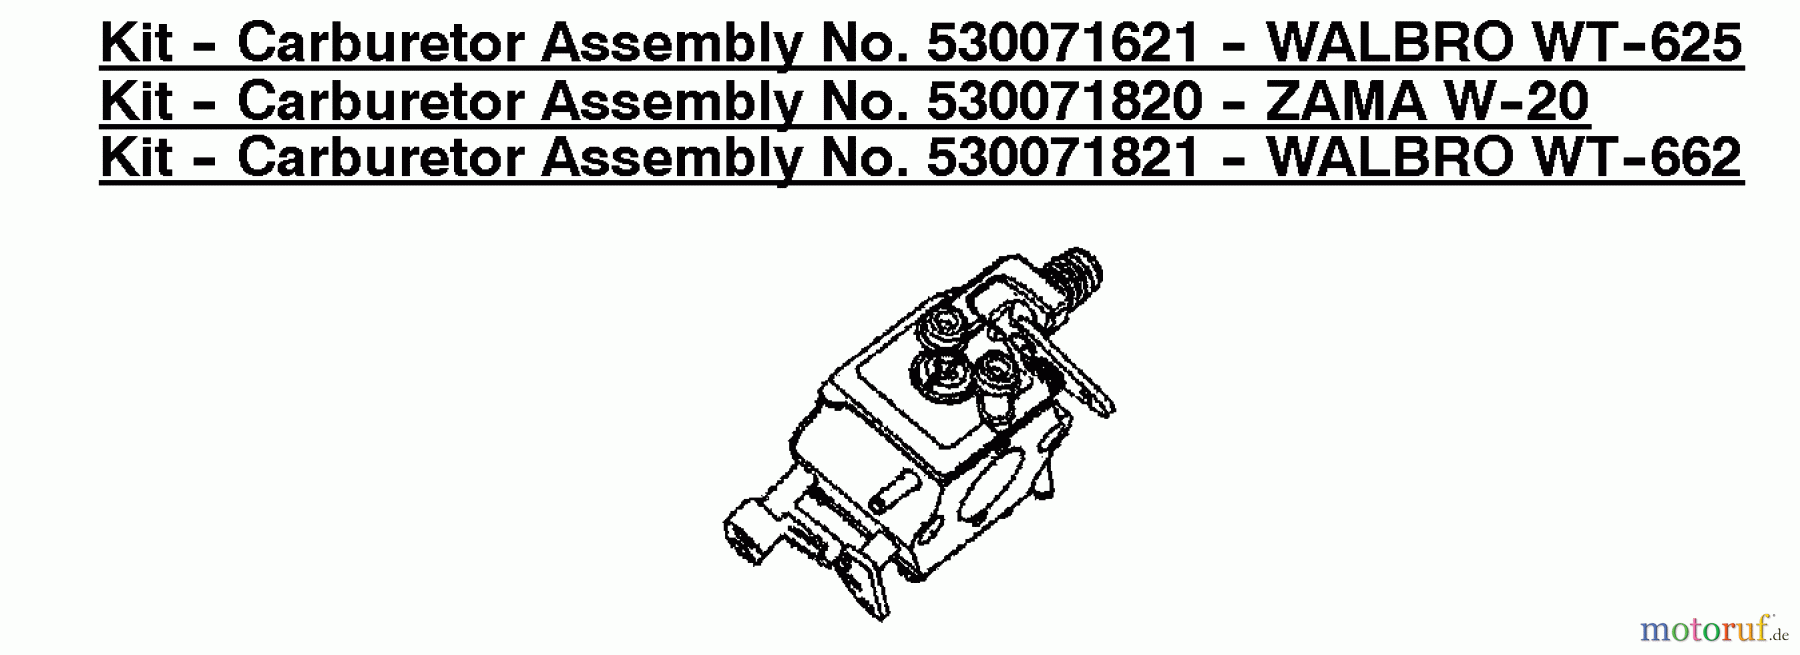  Poulan / Weed Eater Motorsägen PP260 (Type 3) - Poulan Pro Chainsaw Kit - Carburetor Assembly